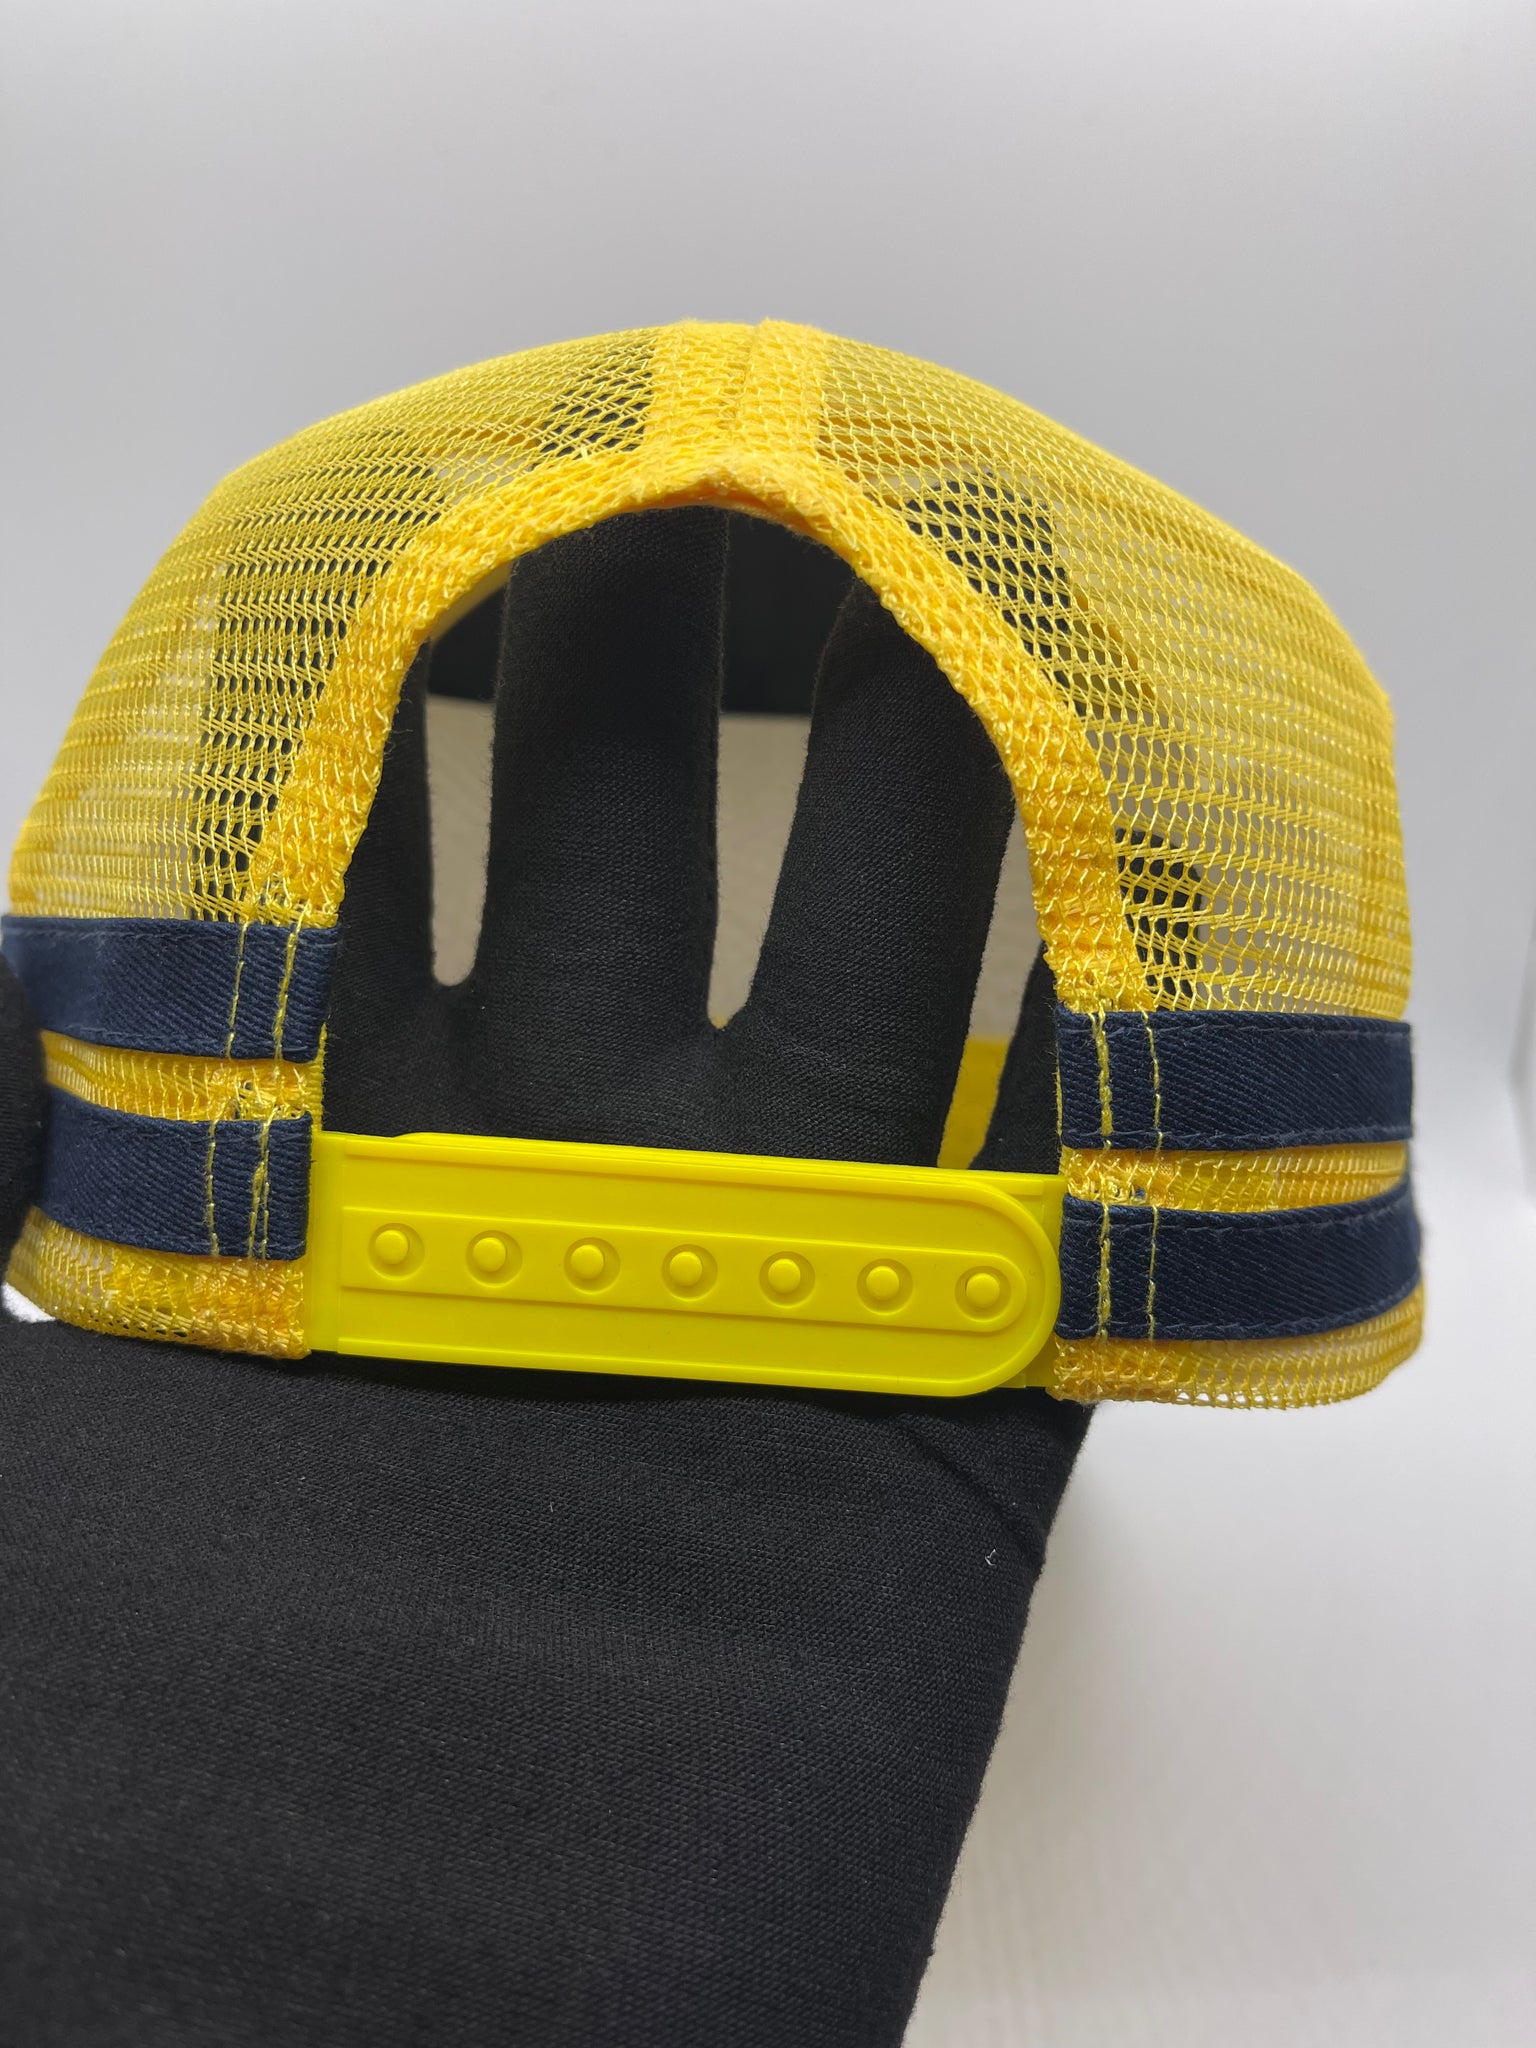 G.Loomis Premium Fishing Cap Snapback Mustard Yellow Dark Blue Mesh Trucker  Hat 